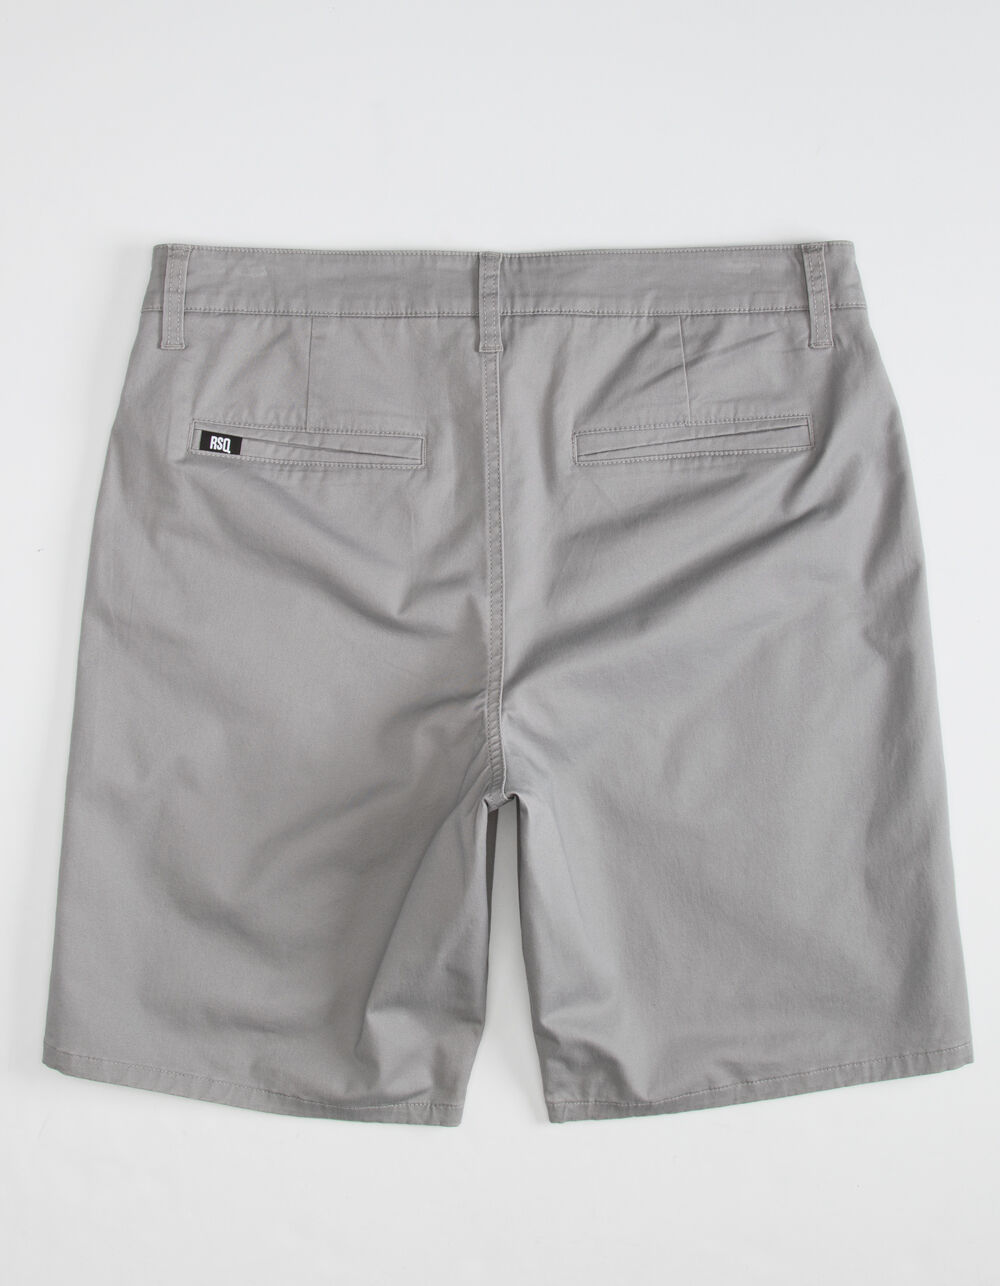 RSQ Mid Length Mens Gray Chino Shorts - GRAY | Tillys